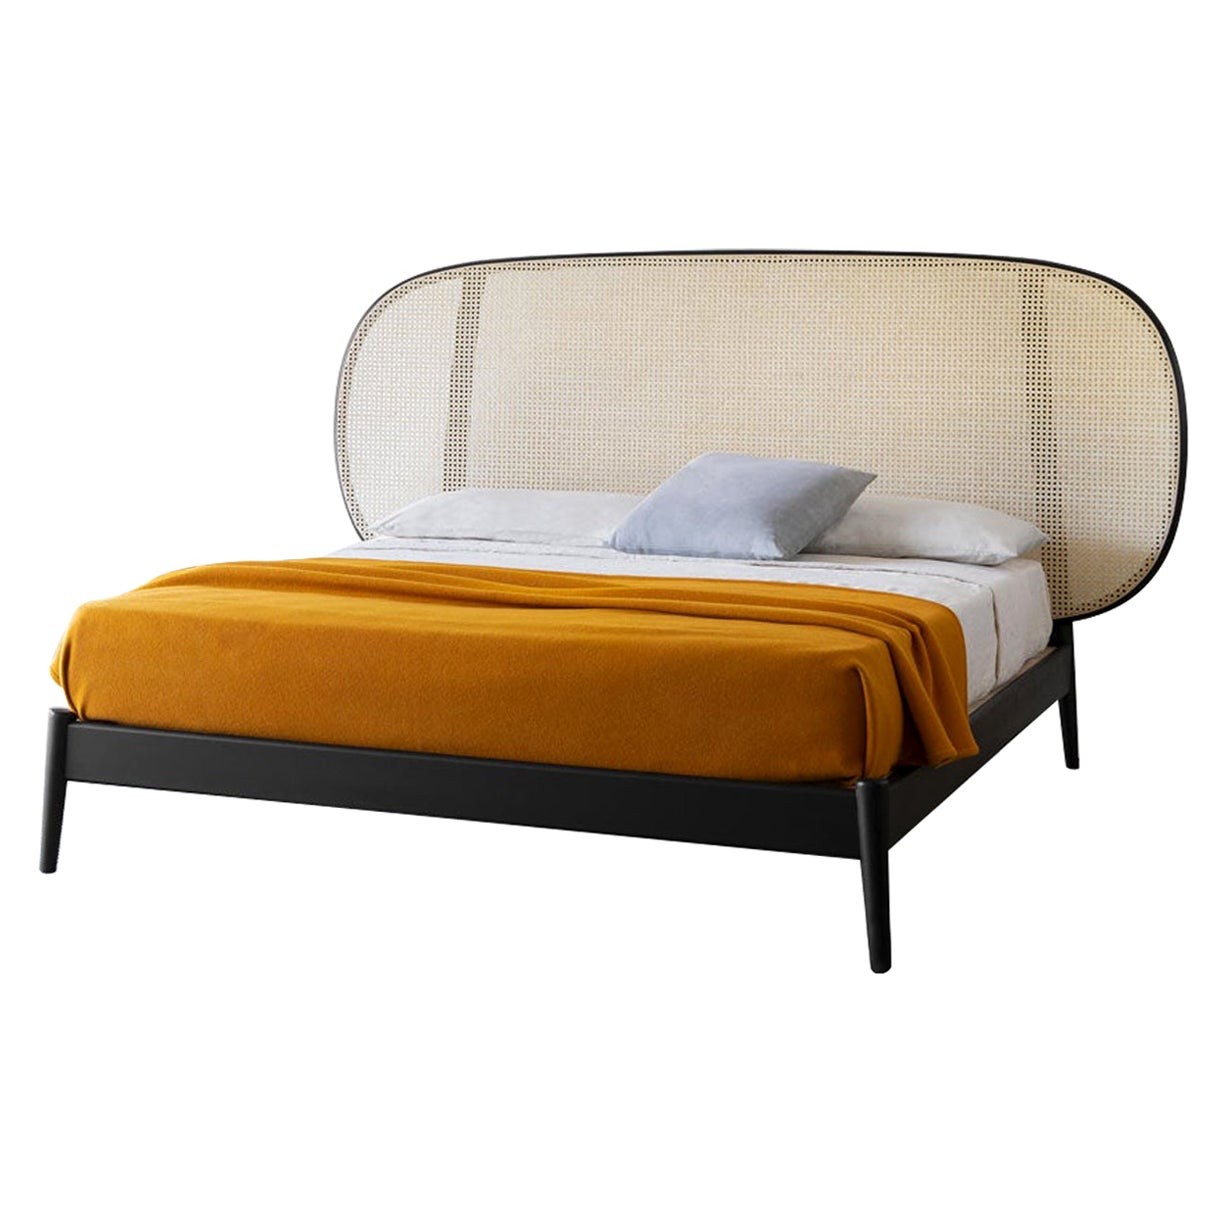 Shiko Wien Queen Size Bed by E-GGS For Sale